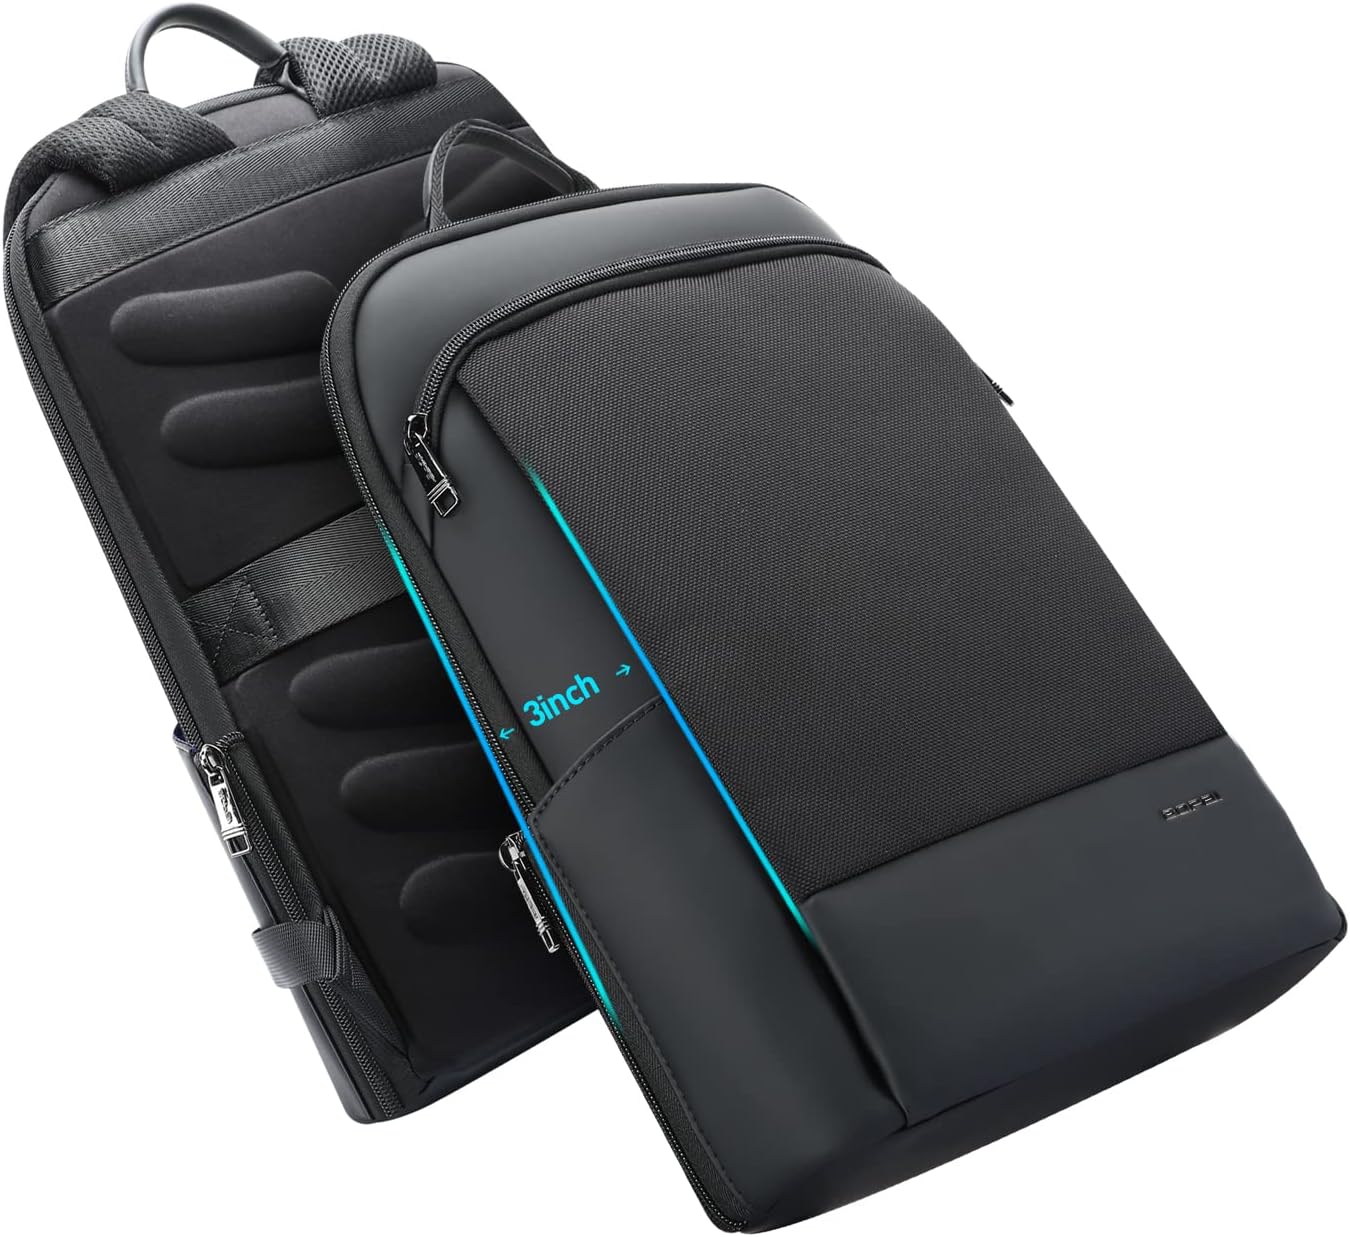 BOPAI 15 inch Super Slim Laptop Backpack Men Anti [...]